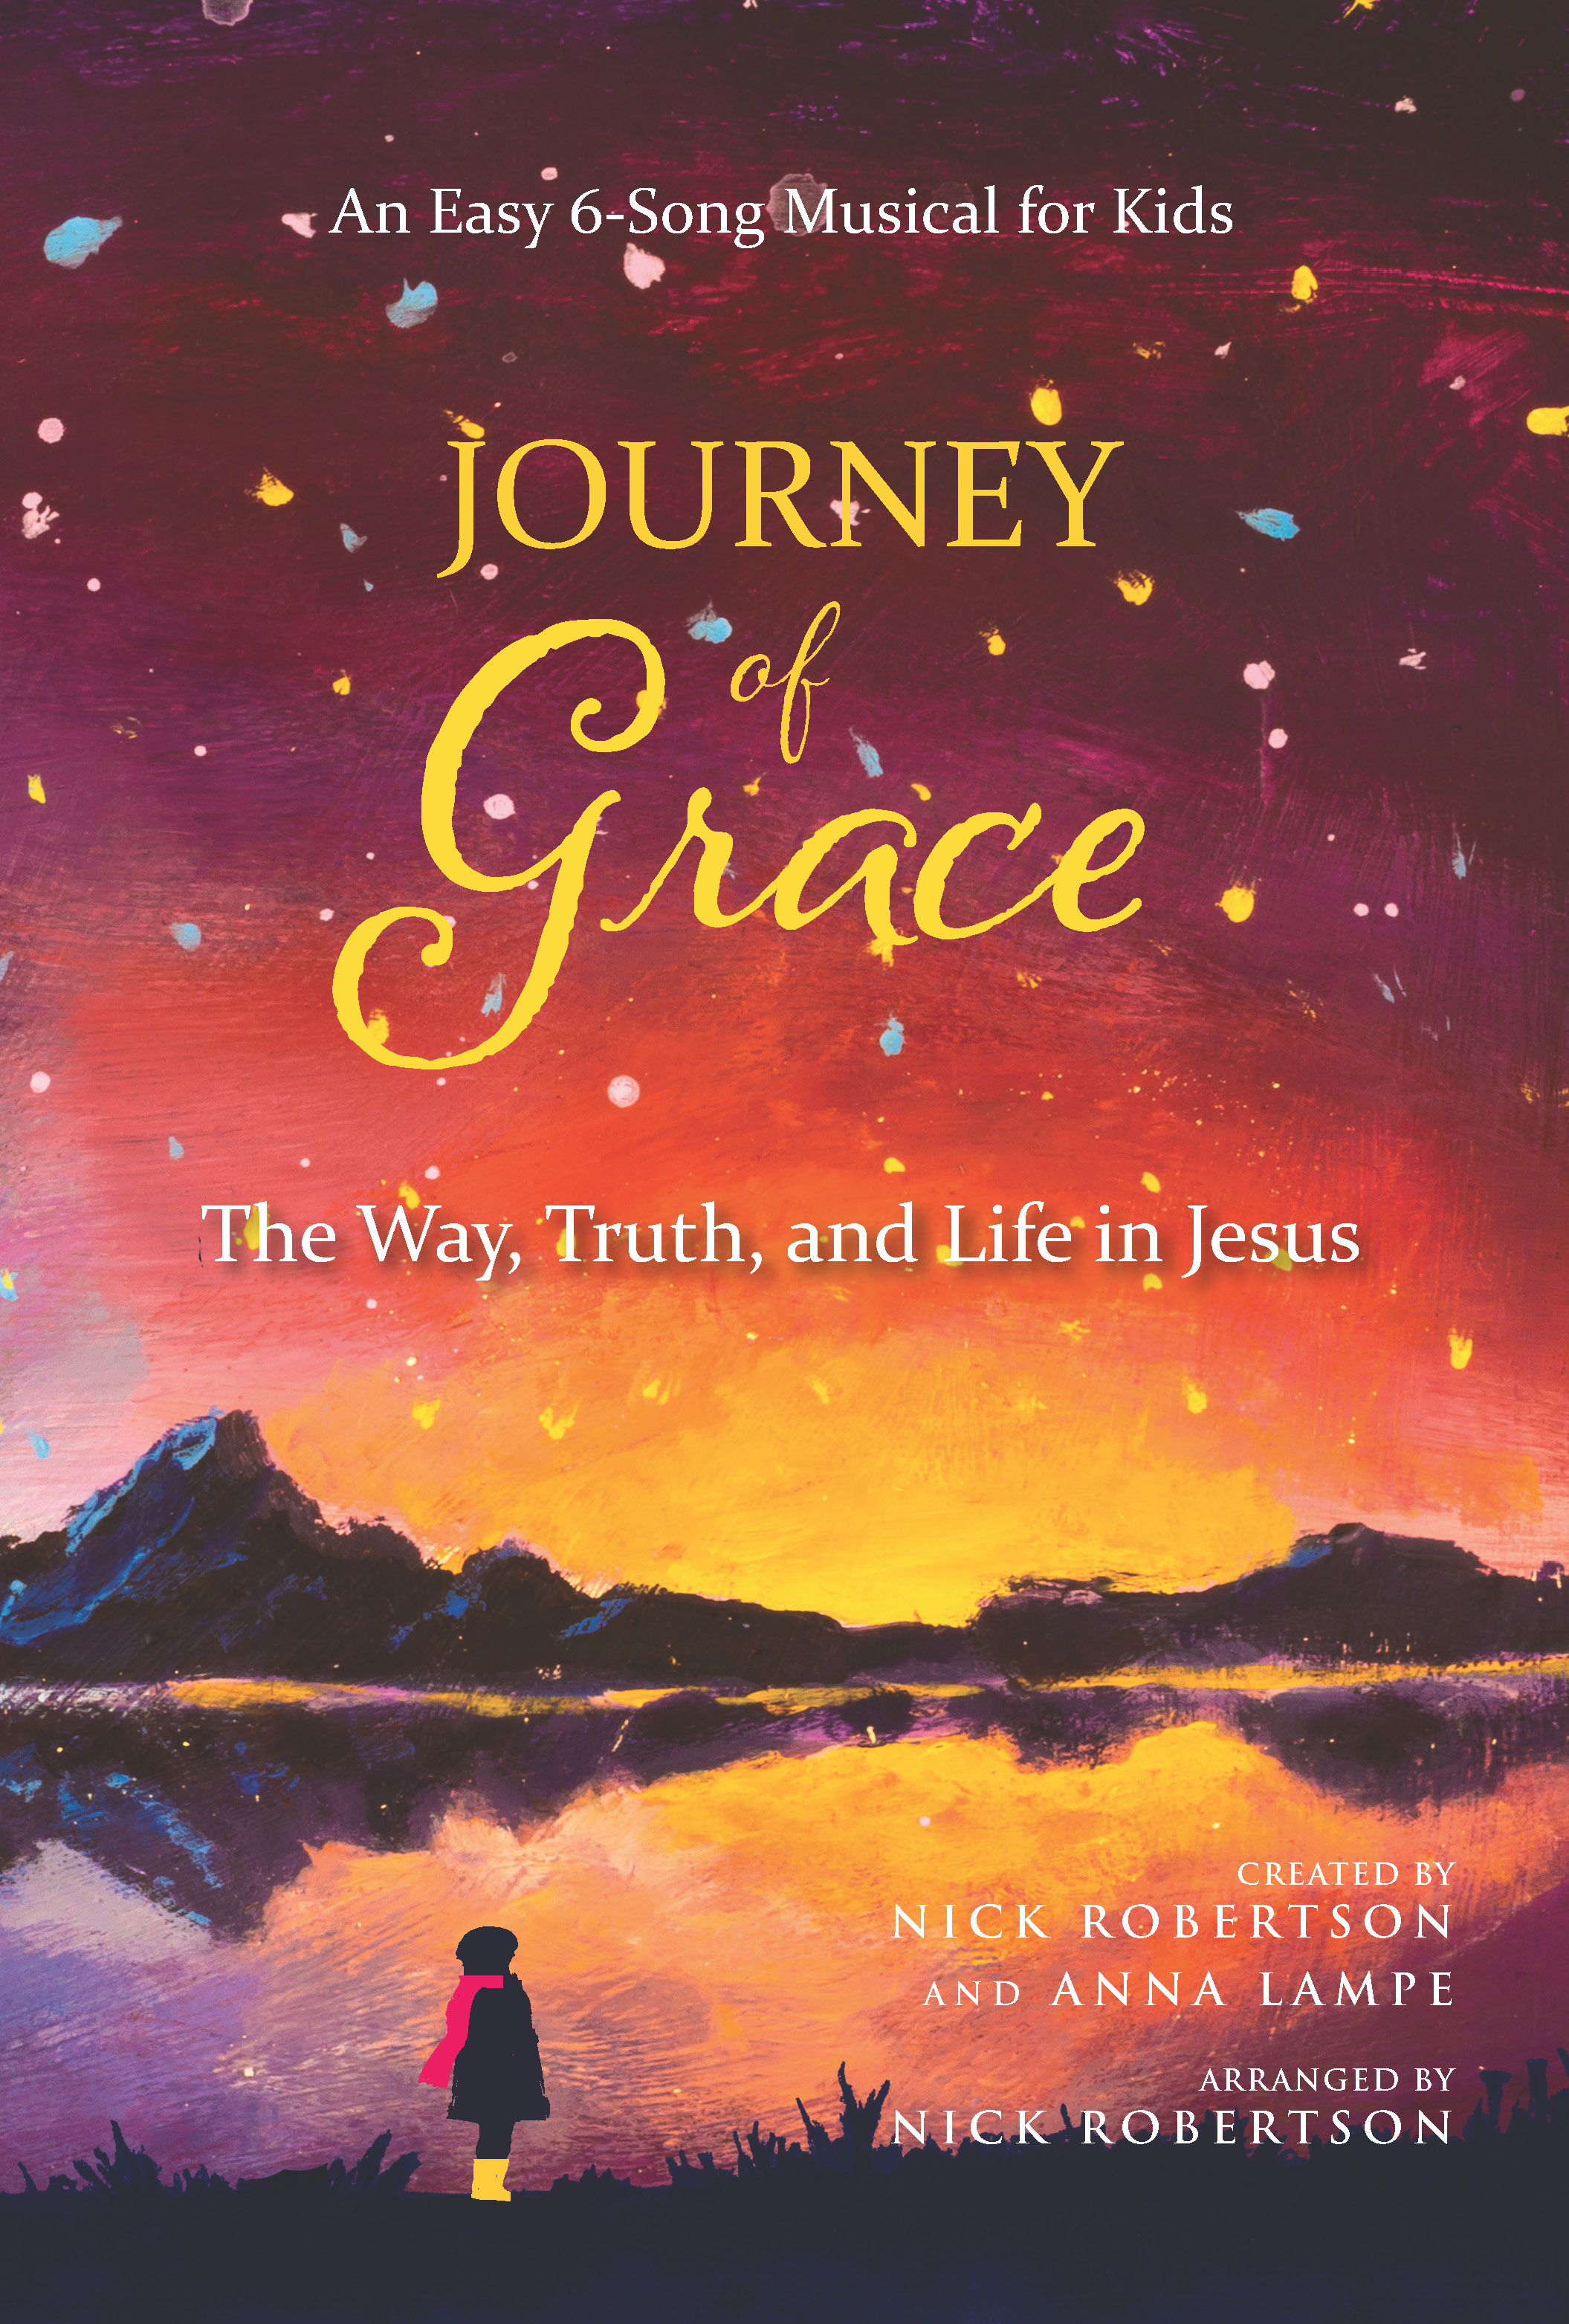 journey of grace facebook